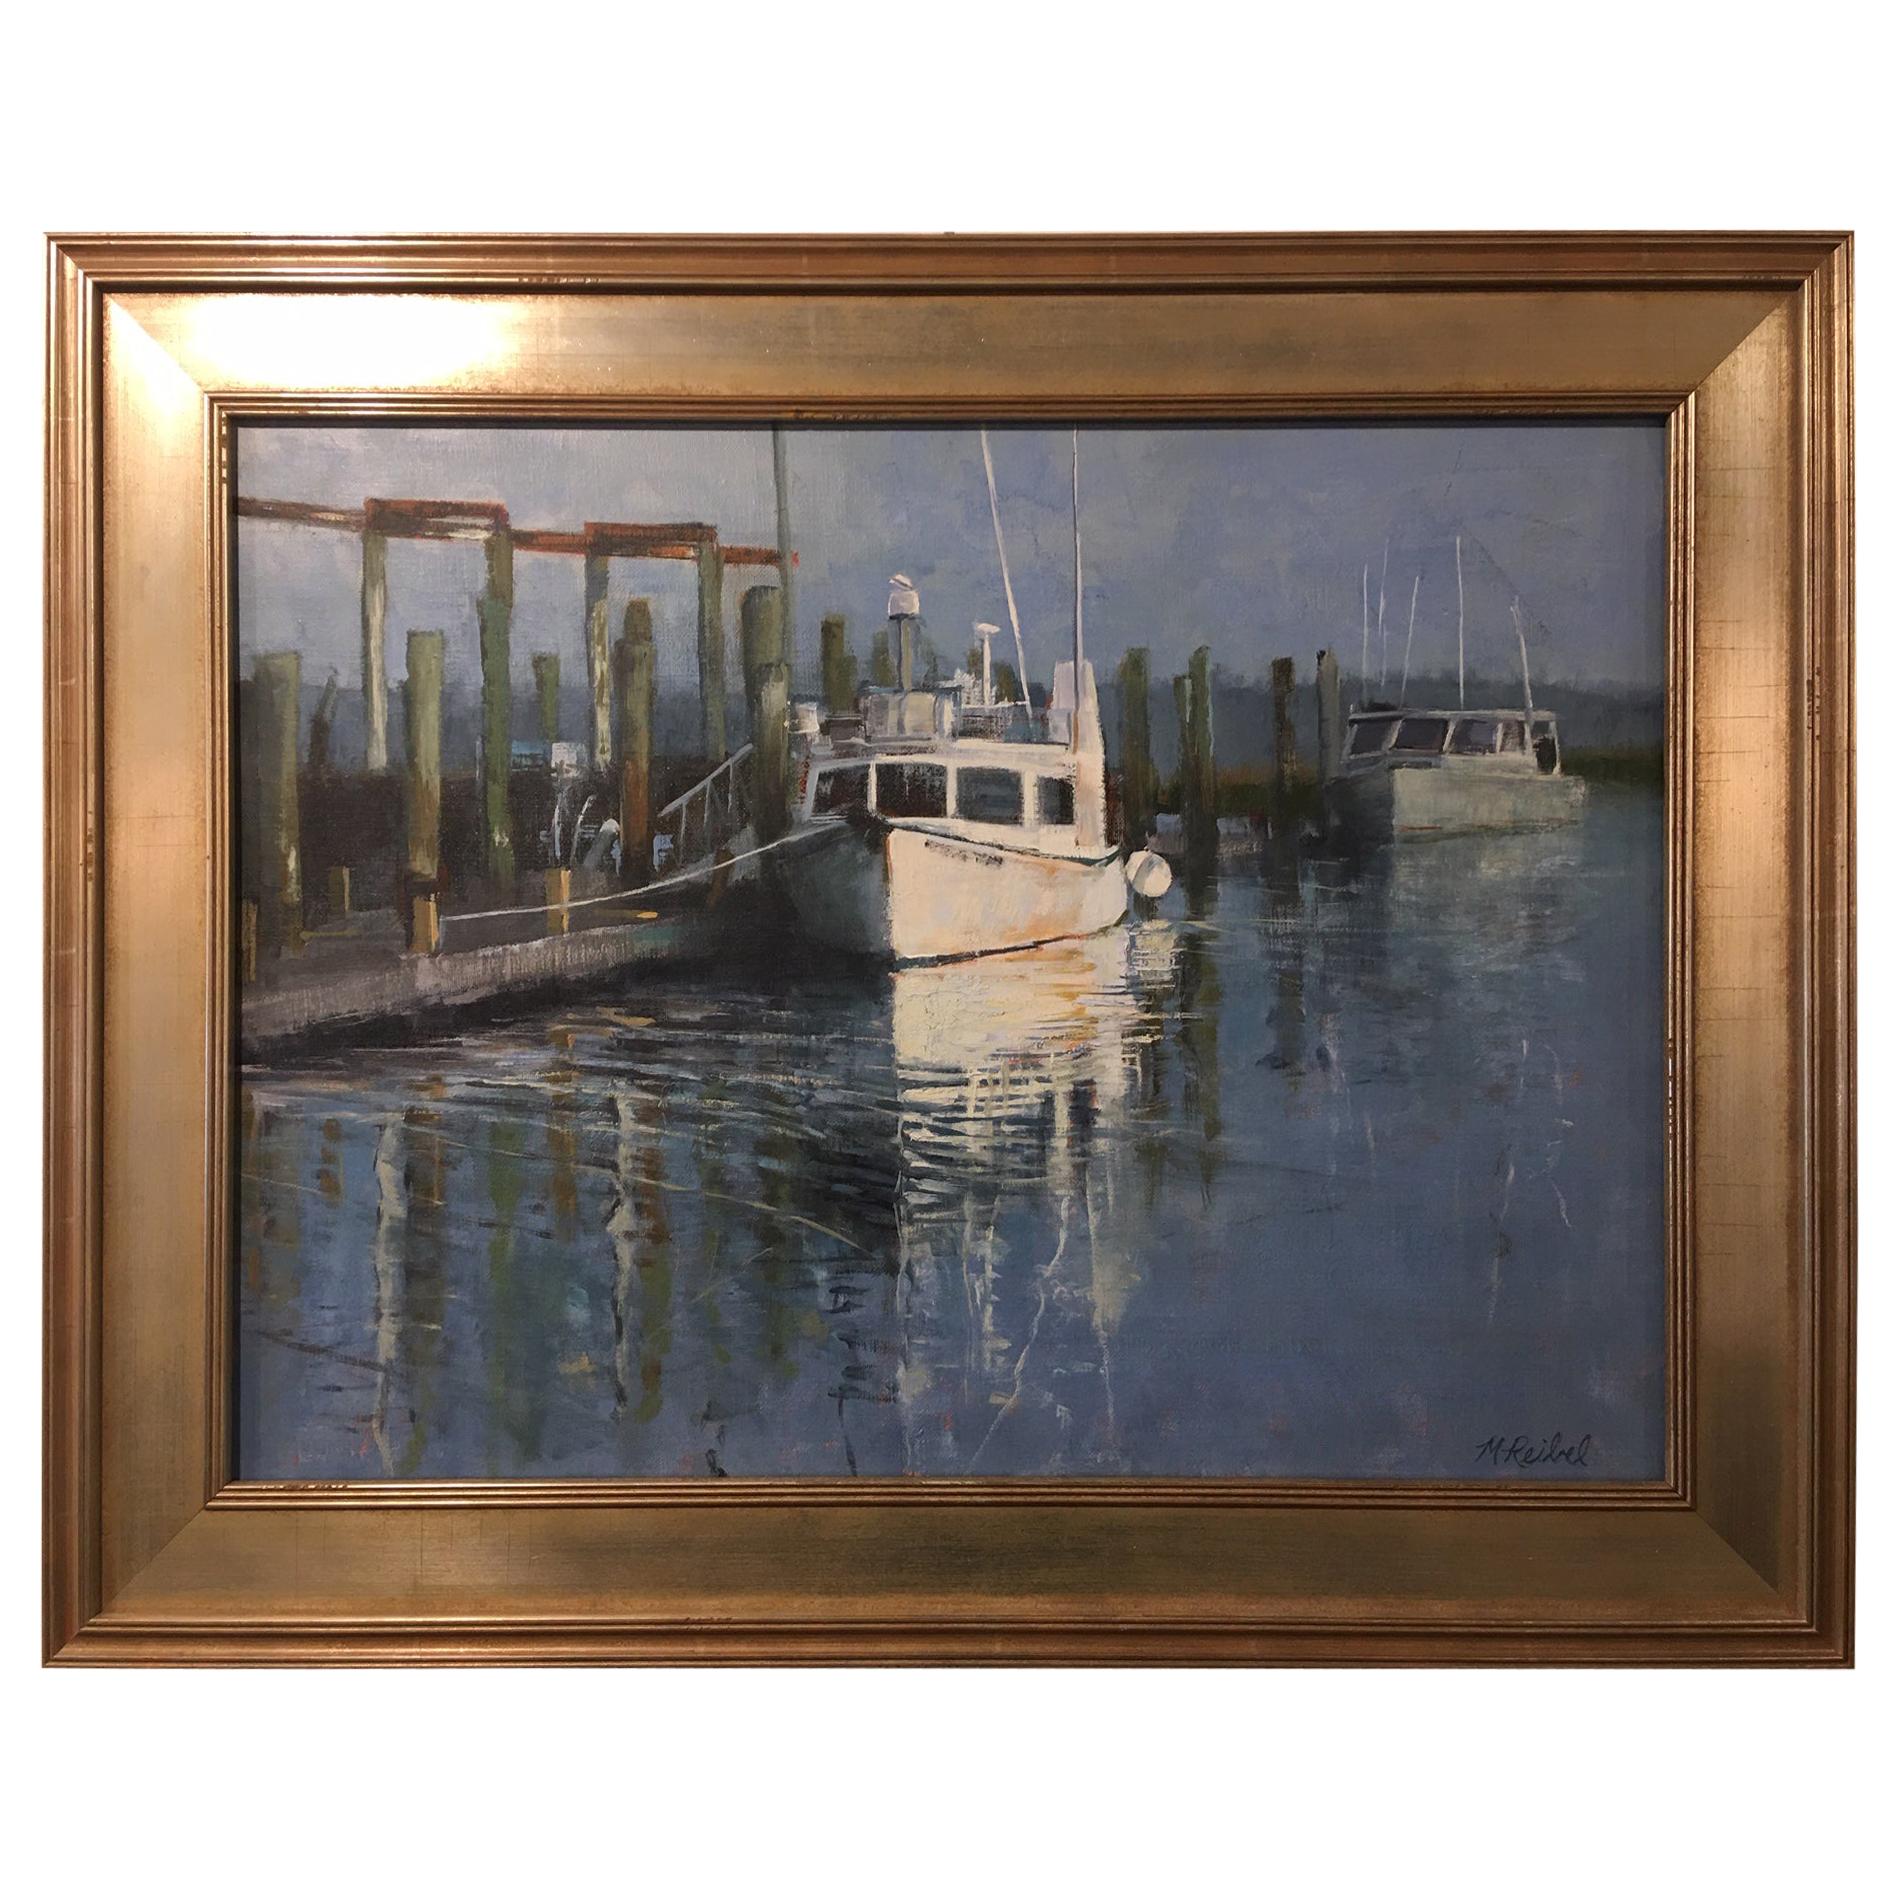 Oil on Linen Panel "Canyon Runner", Boats at Dock, Michael Reibel